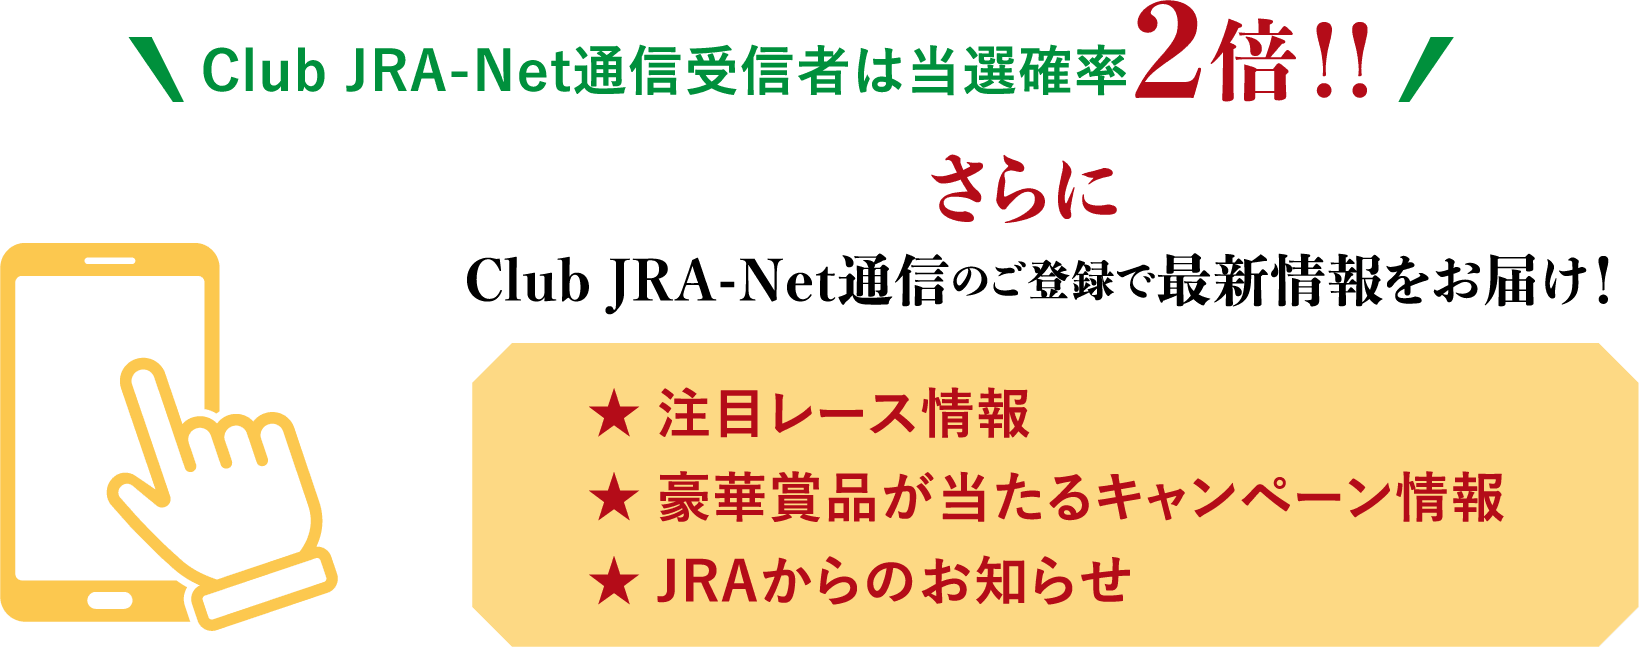 Club JRA-NetʐMM҂͓Im2{IIClub JRA-NetʐM̂o^ōŐV͂I